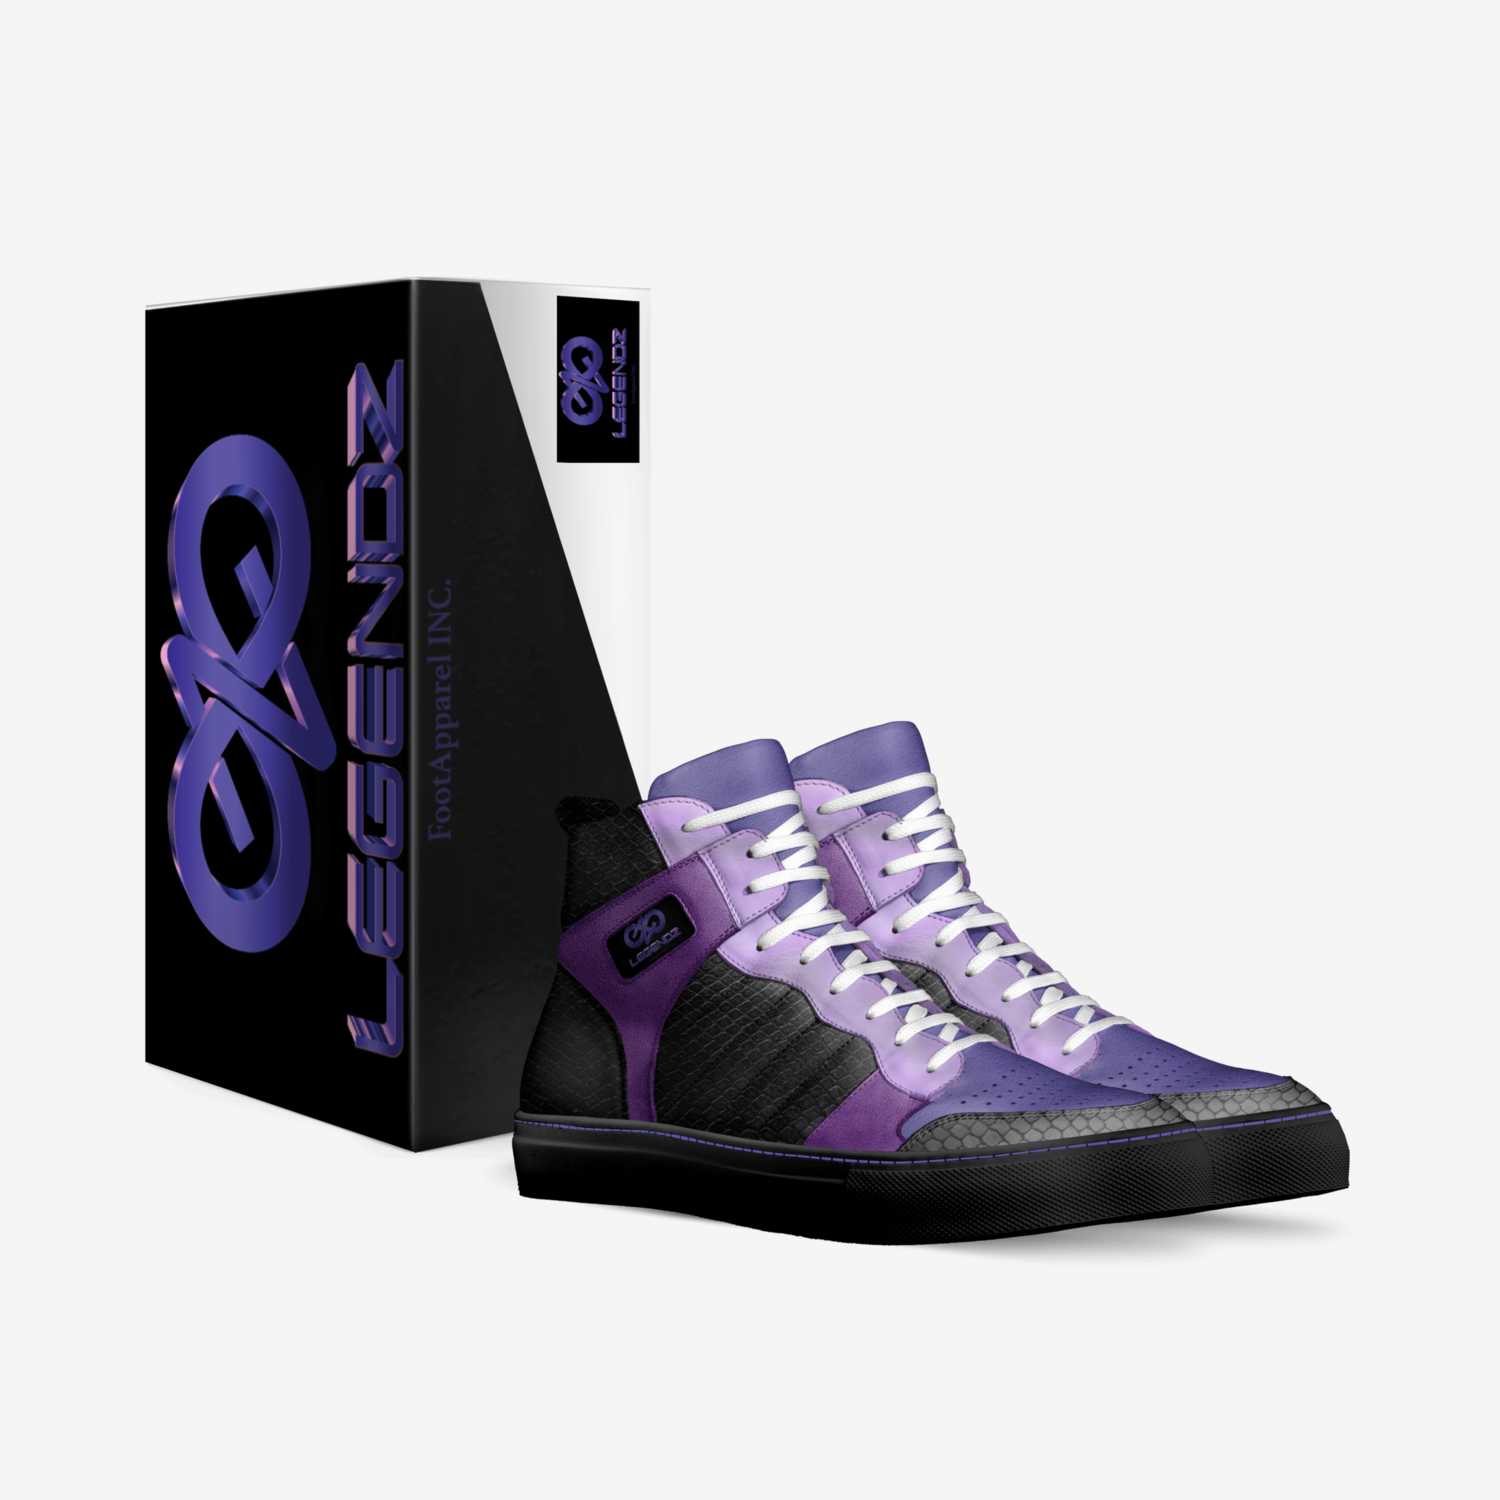 FKNK20 PurpleRAIN custom made in Italy shoes by Juju & Najm Toomey | Box view